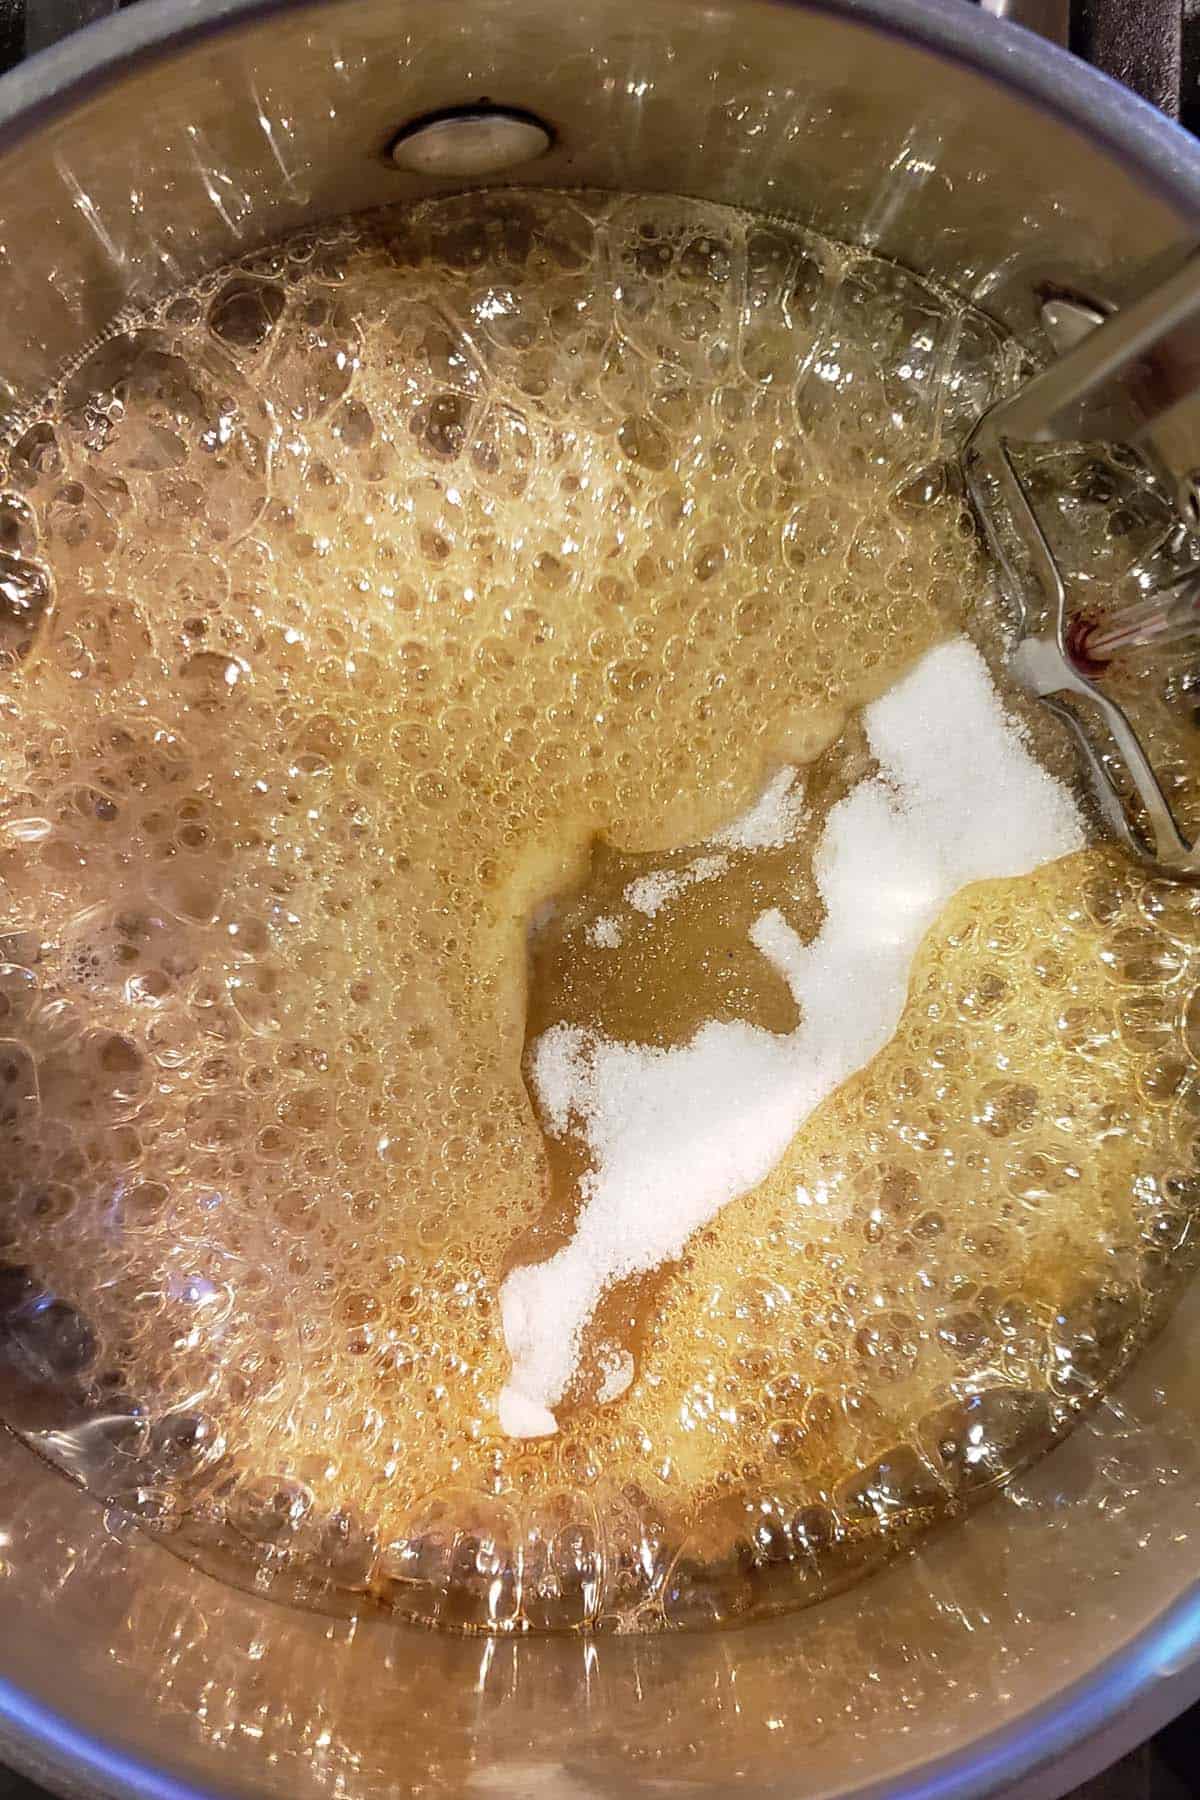 Boiling sugar and honey in a saucepan partially dissolved sugar.